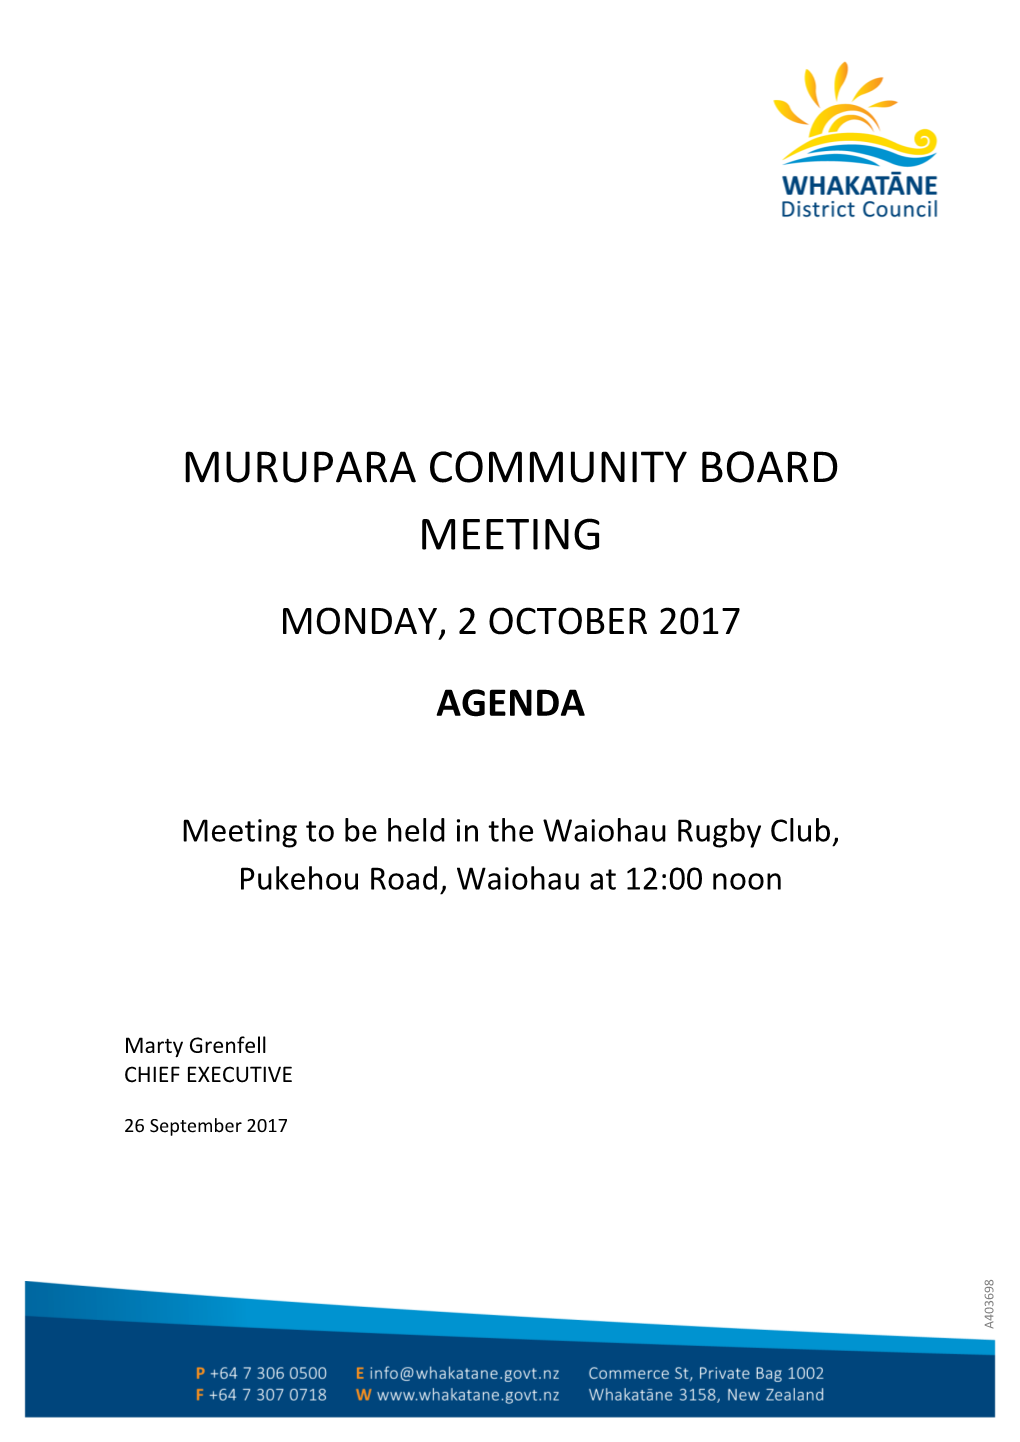 Murupara Community Board 2 October 2017